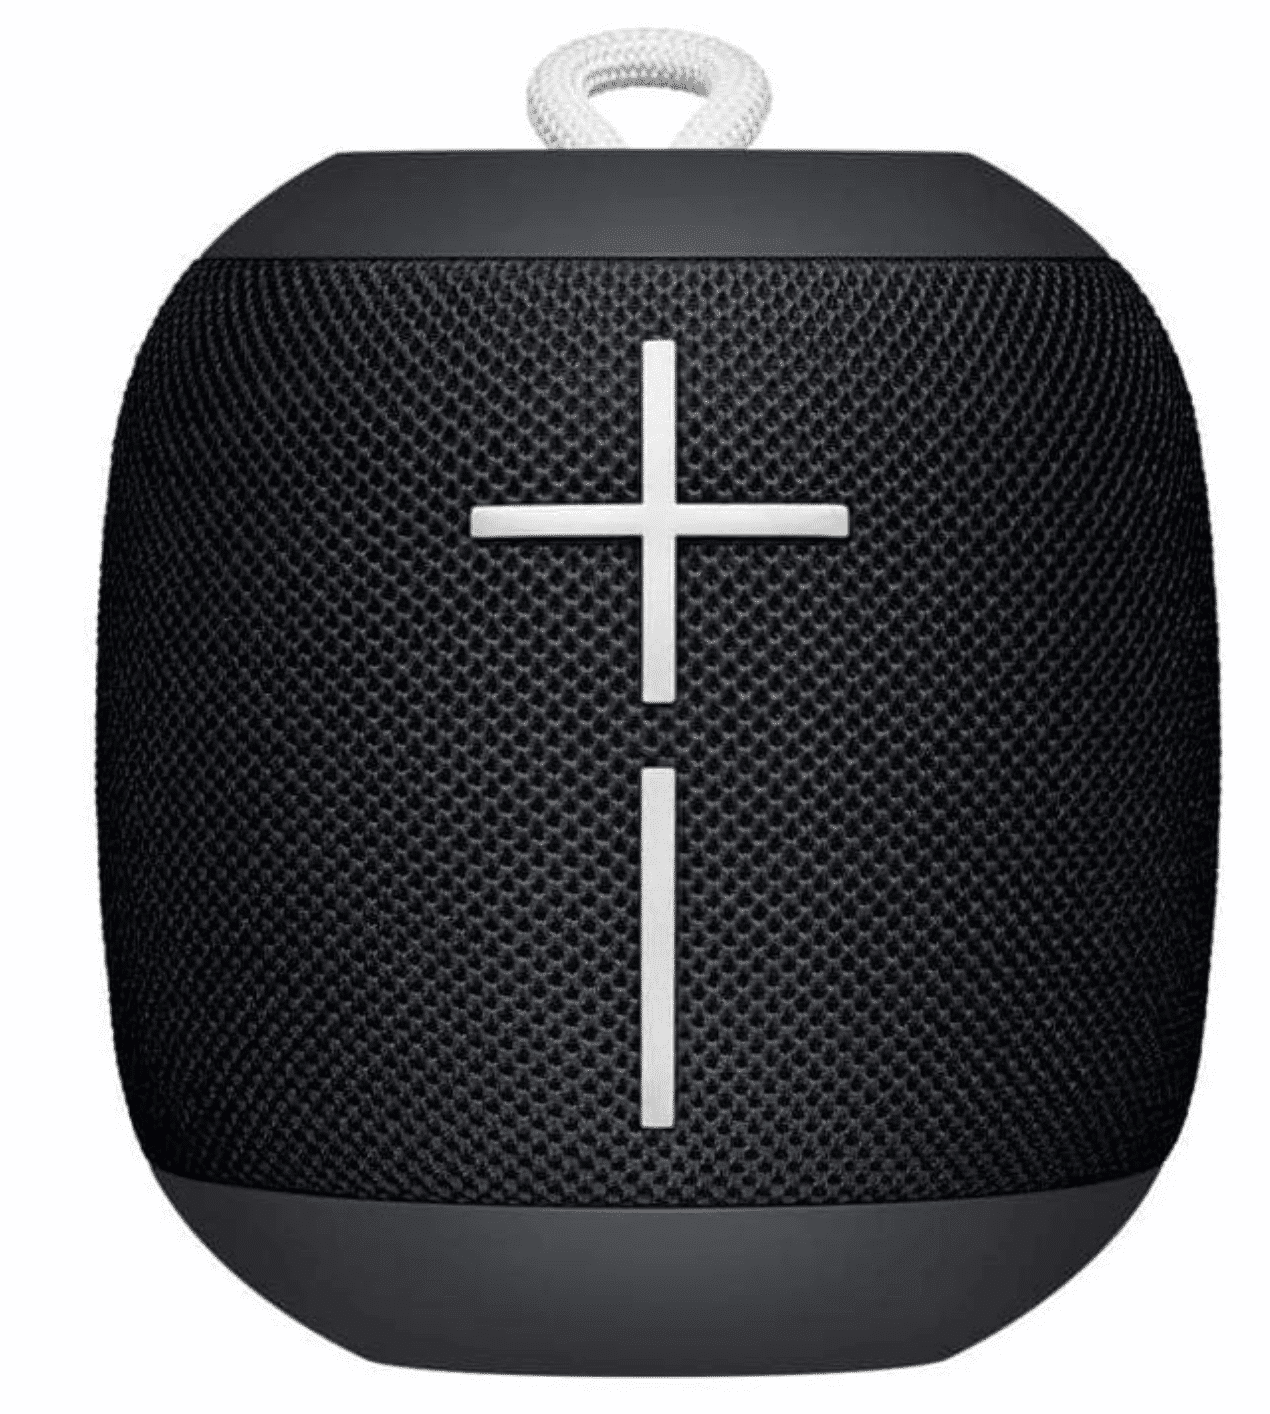 Black Portable Bluetooth speaker